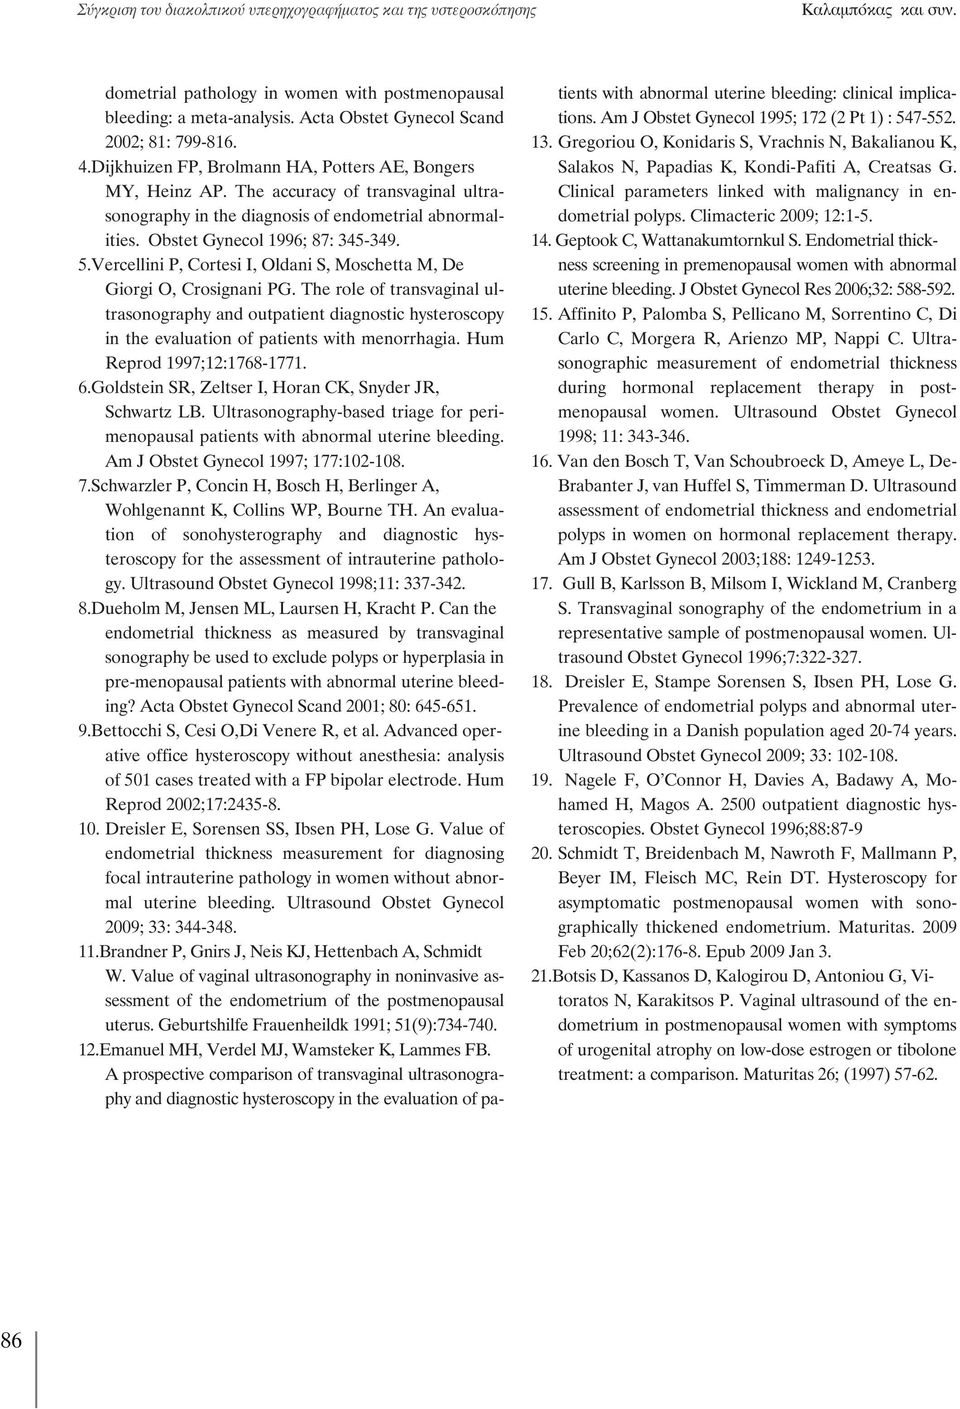 Obstet Gynecol 1996; 87: 345-349. 5.Vercellini P, Cortesi I, Oldani S, Moschetta M, De Giorgi O, Crosignani PG.